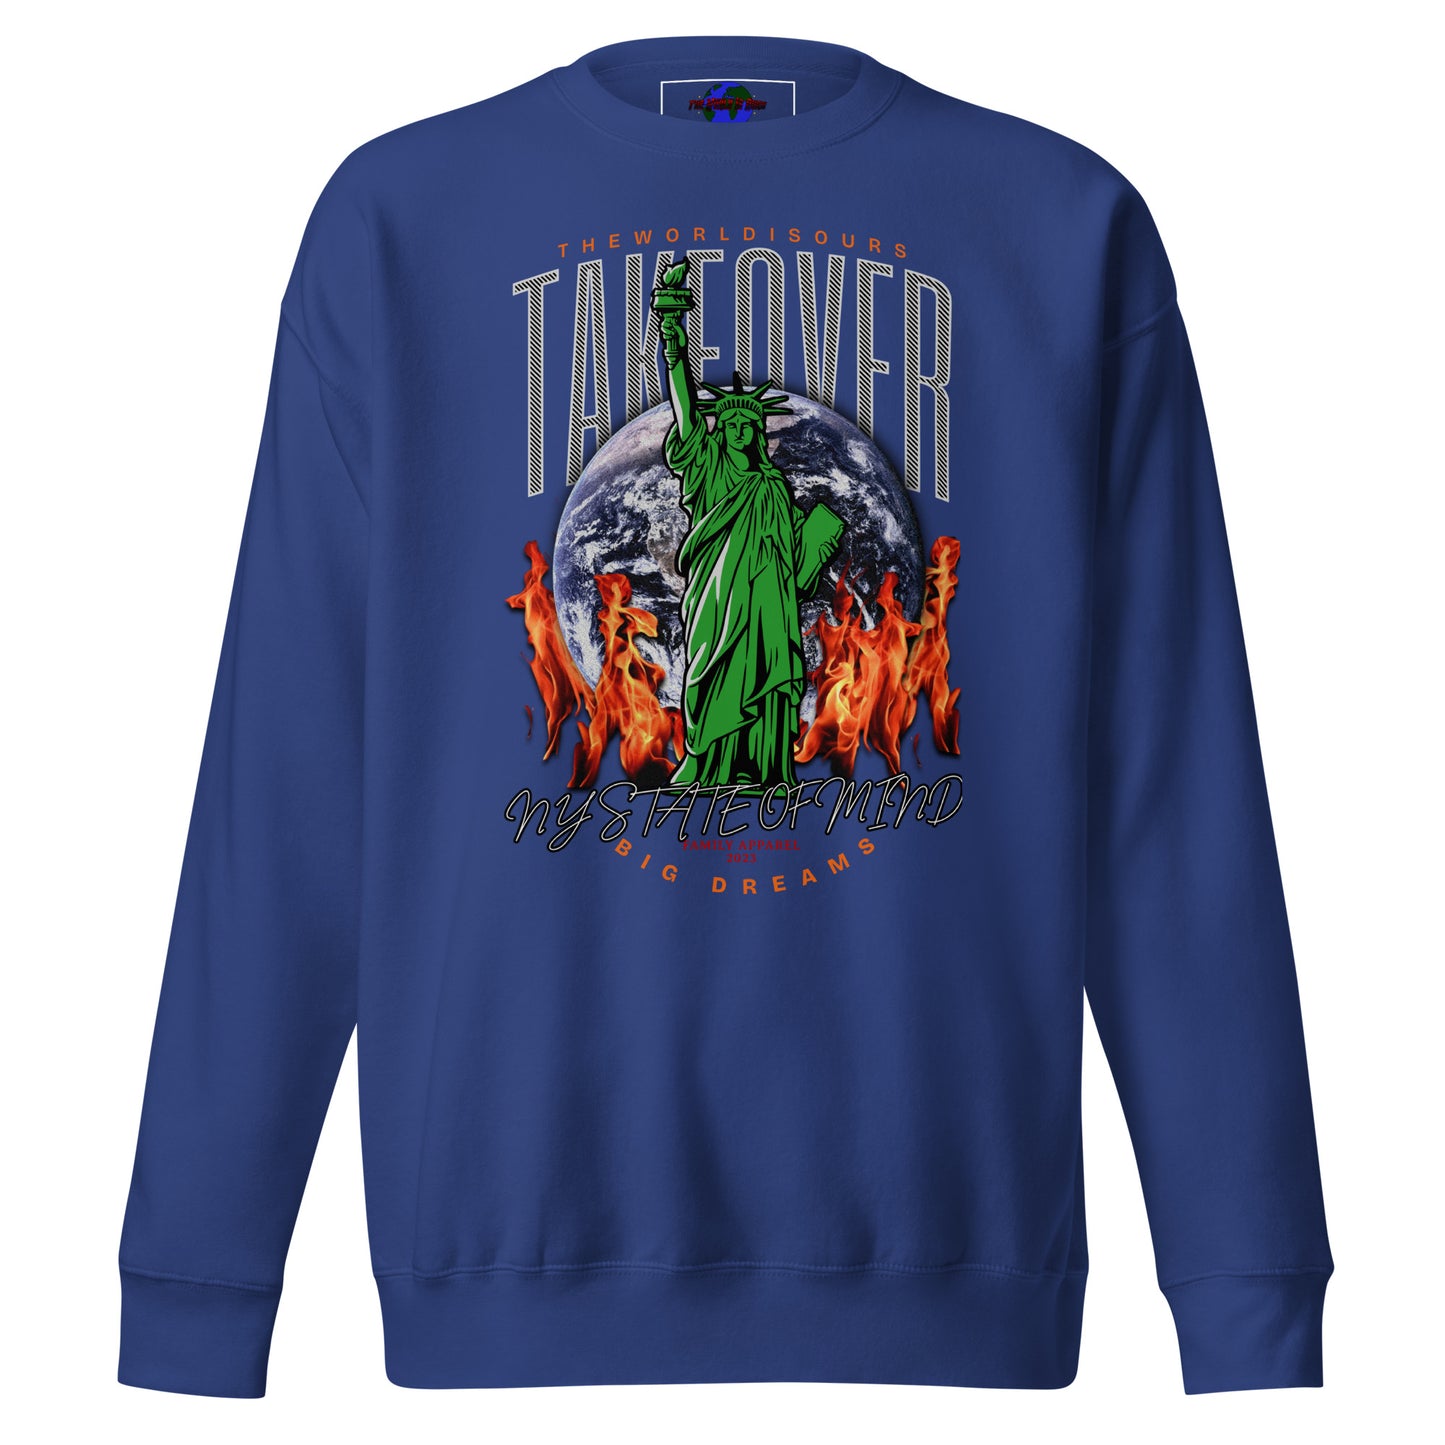 TWIO NY State Of Mind Unisex Premium Sweatshirt